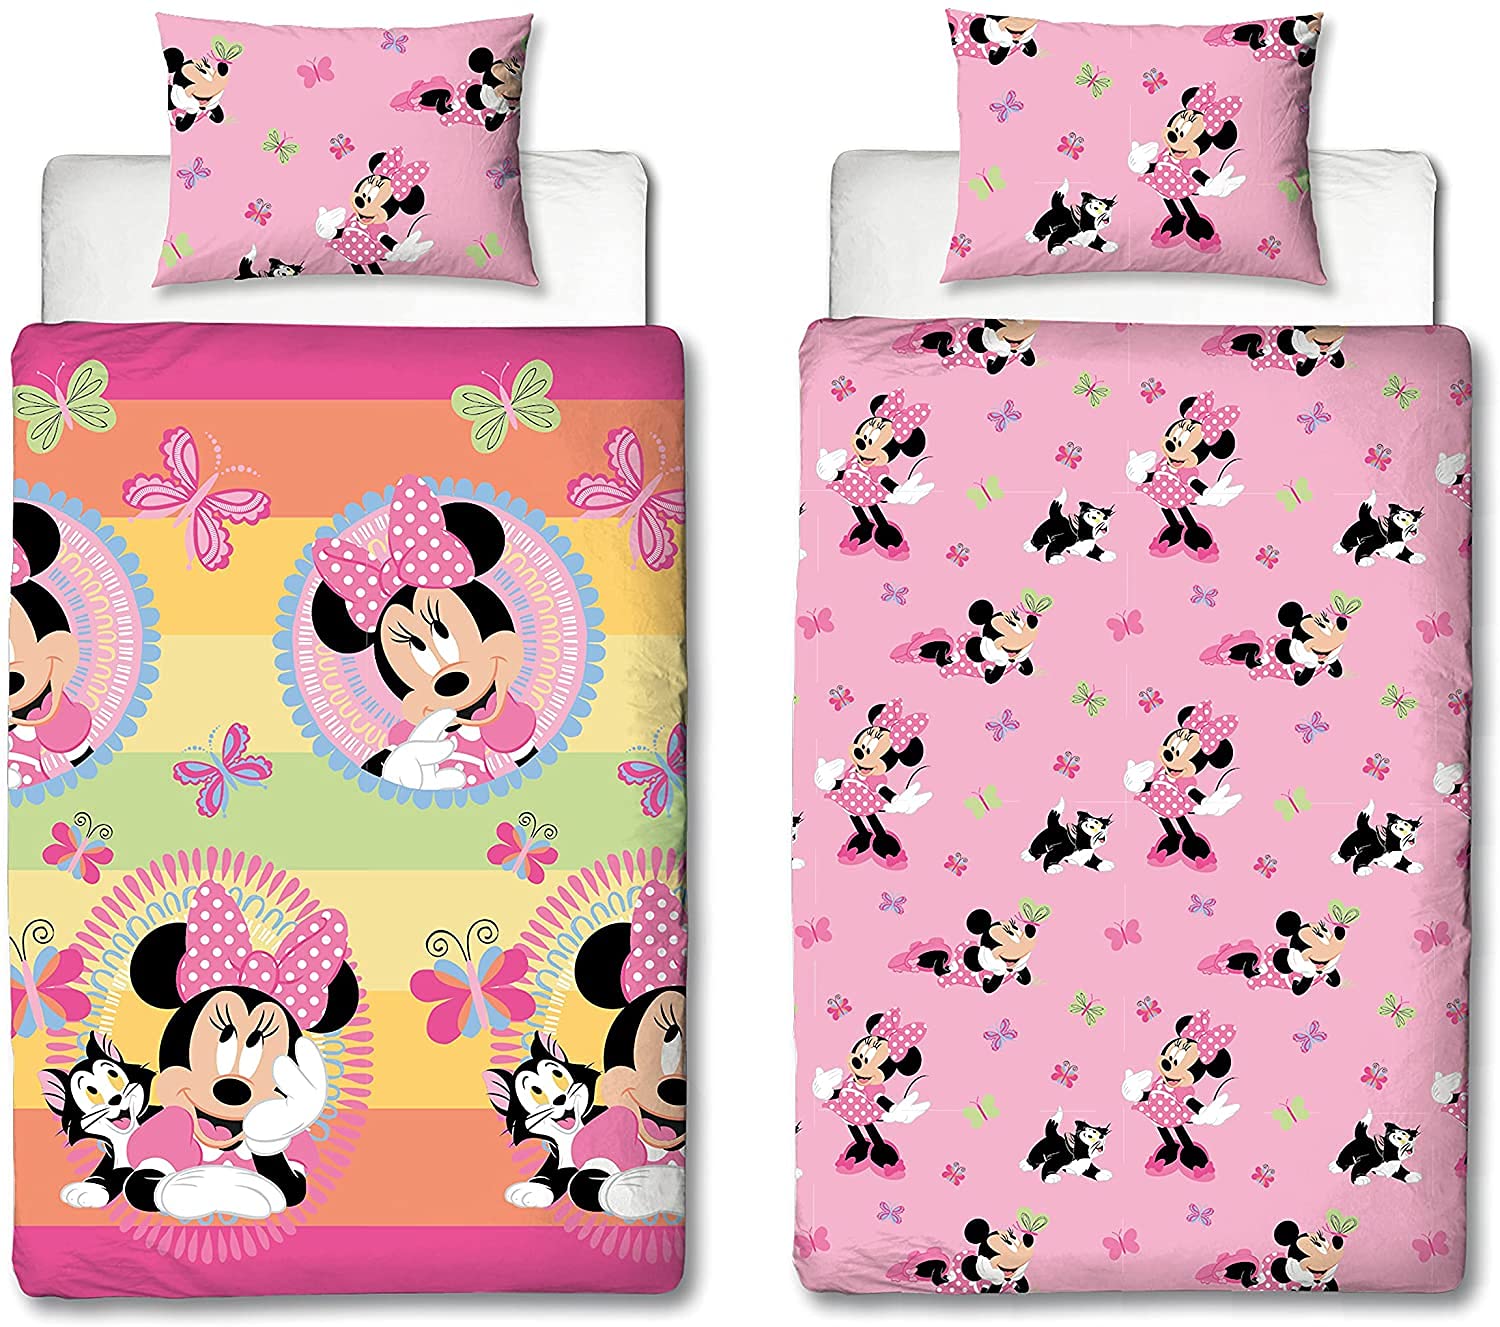 Disney Minnie Mouse Single Duvet Cover Bedding Set With Matching Pillow Case (Minnie Mouse Cute, Single (135cm x 200cm))